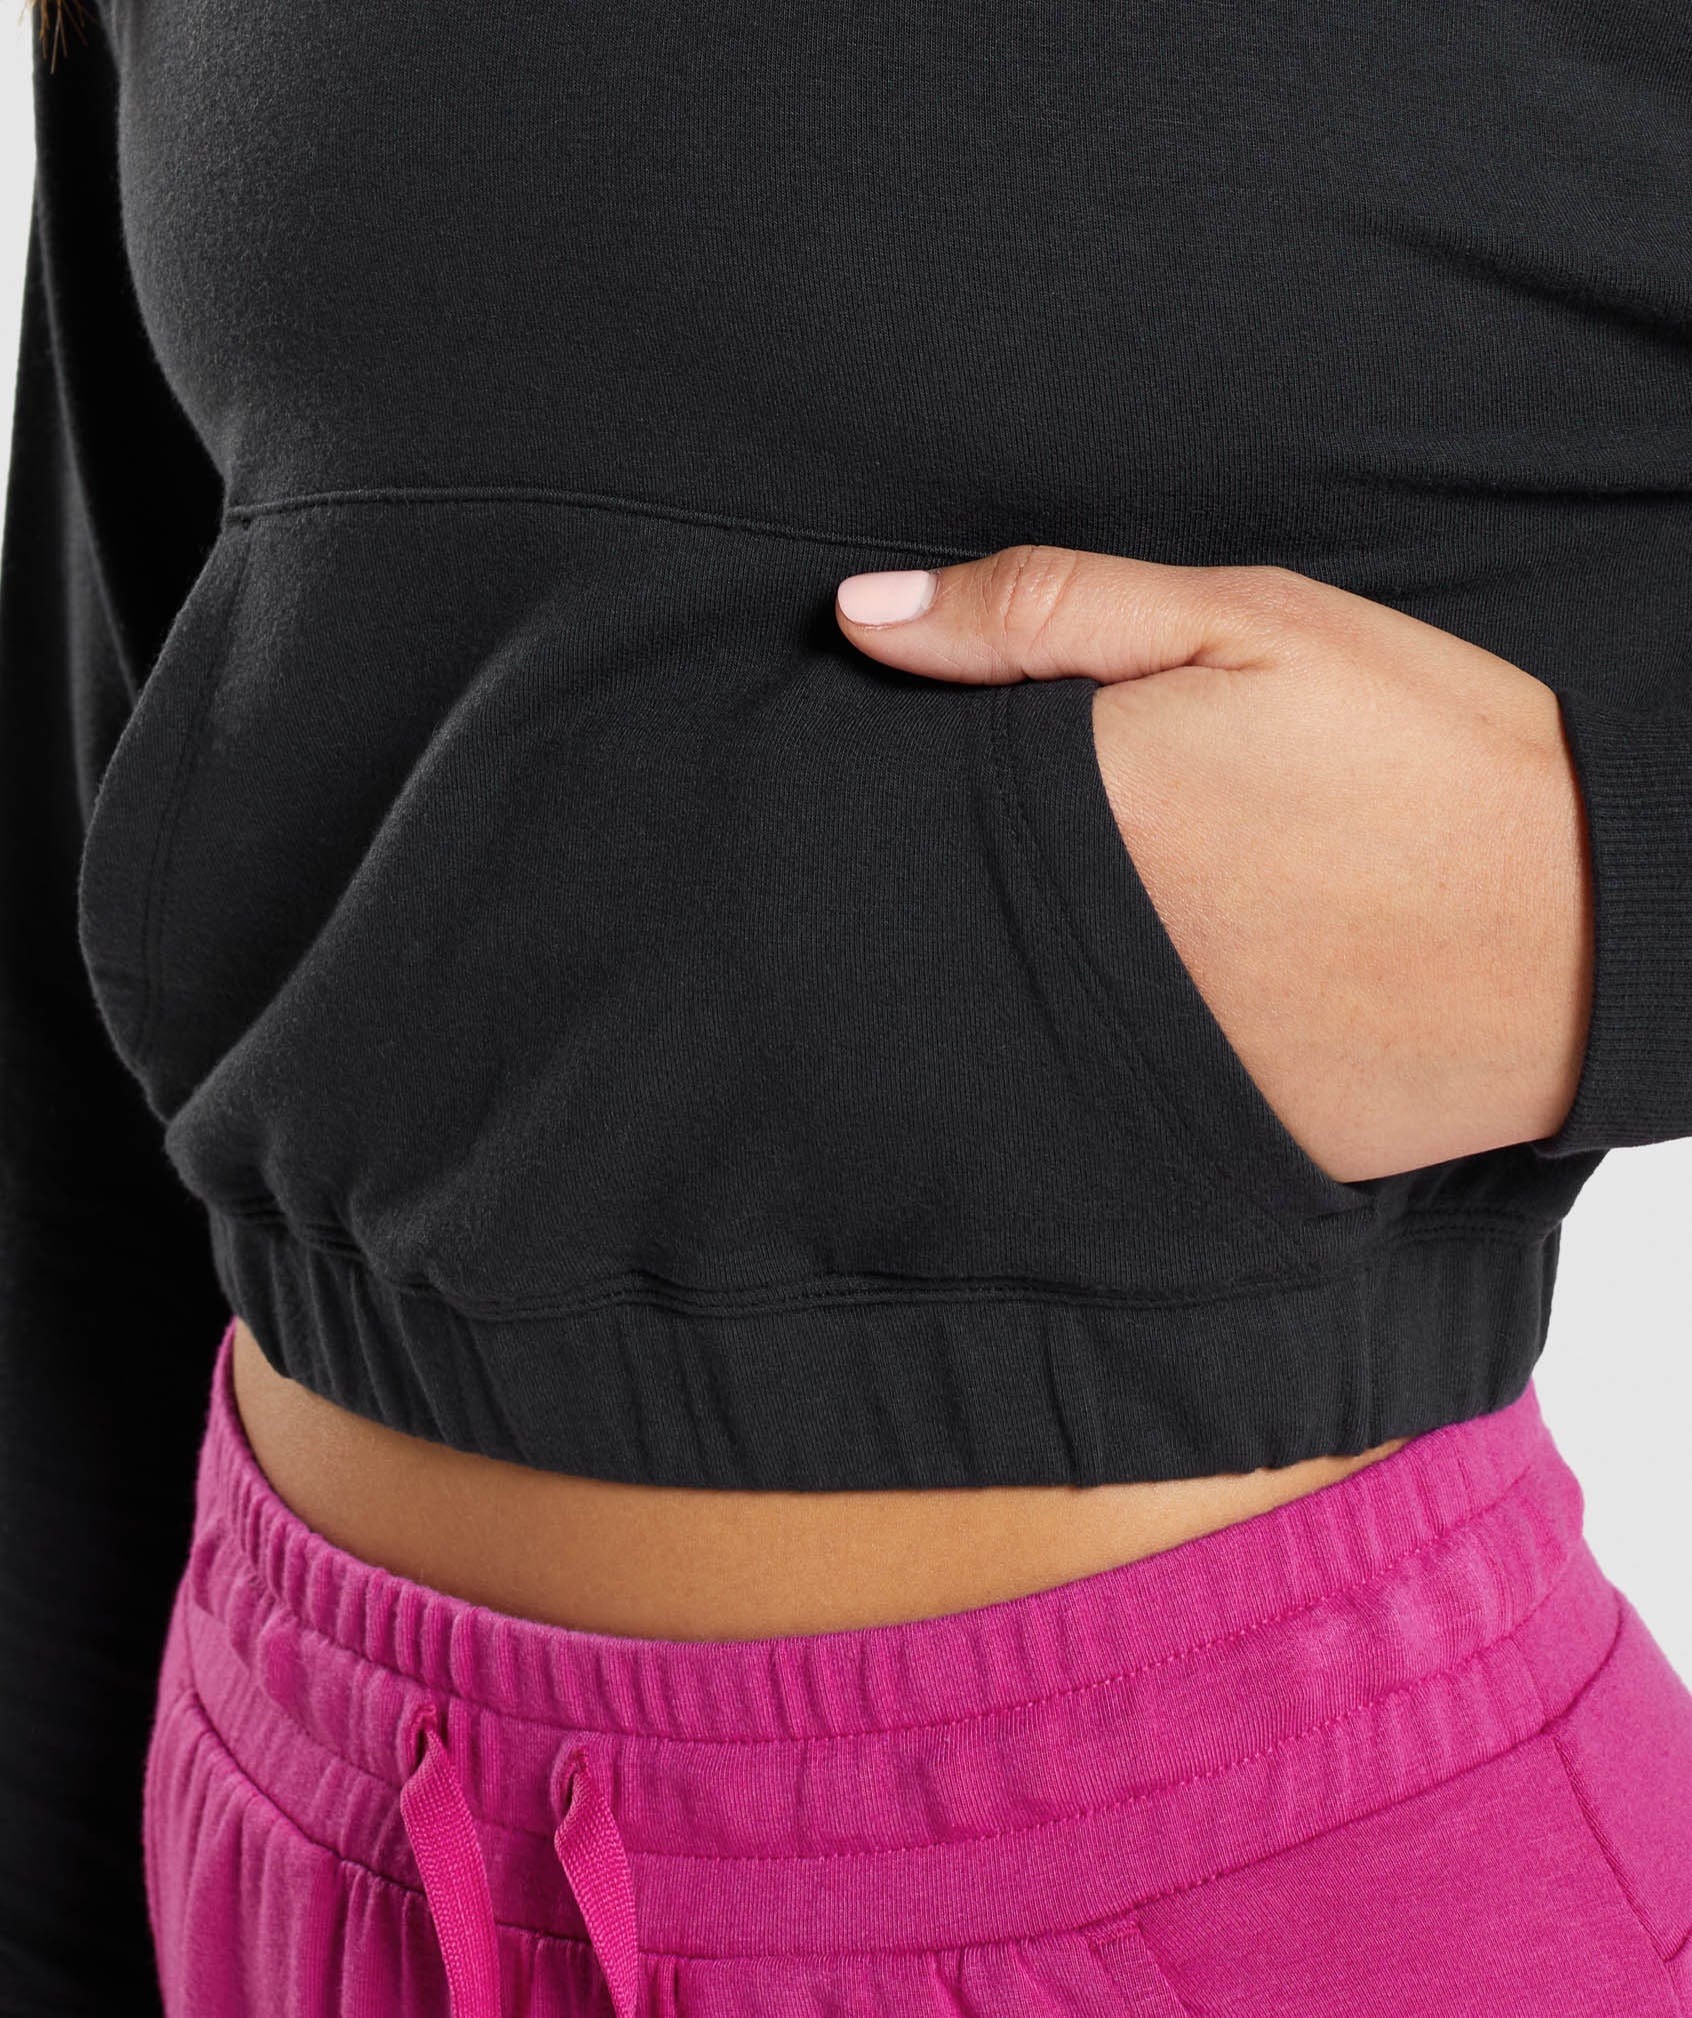 Womens Gymshark Training Pippa Pullover Sportswear Top Black New